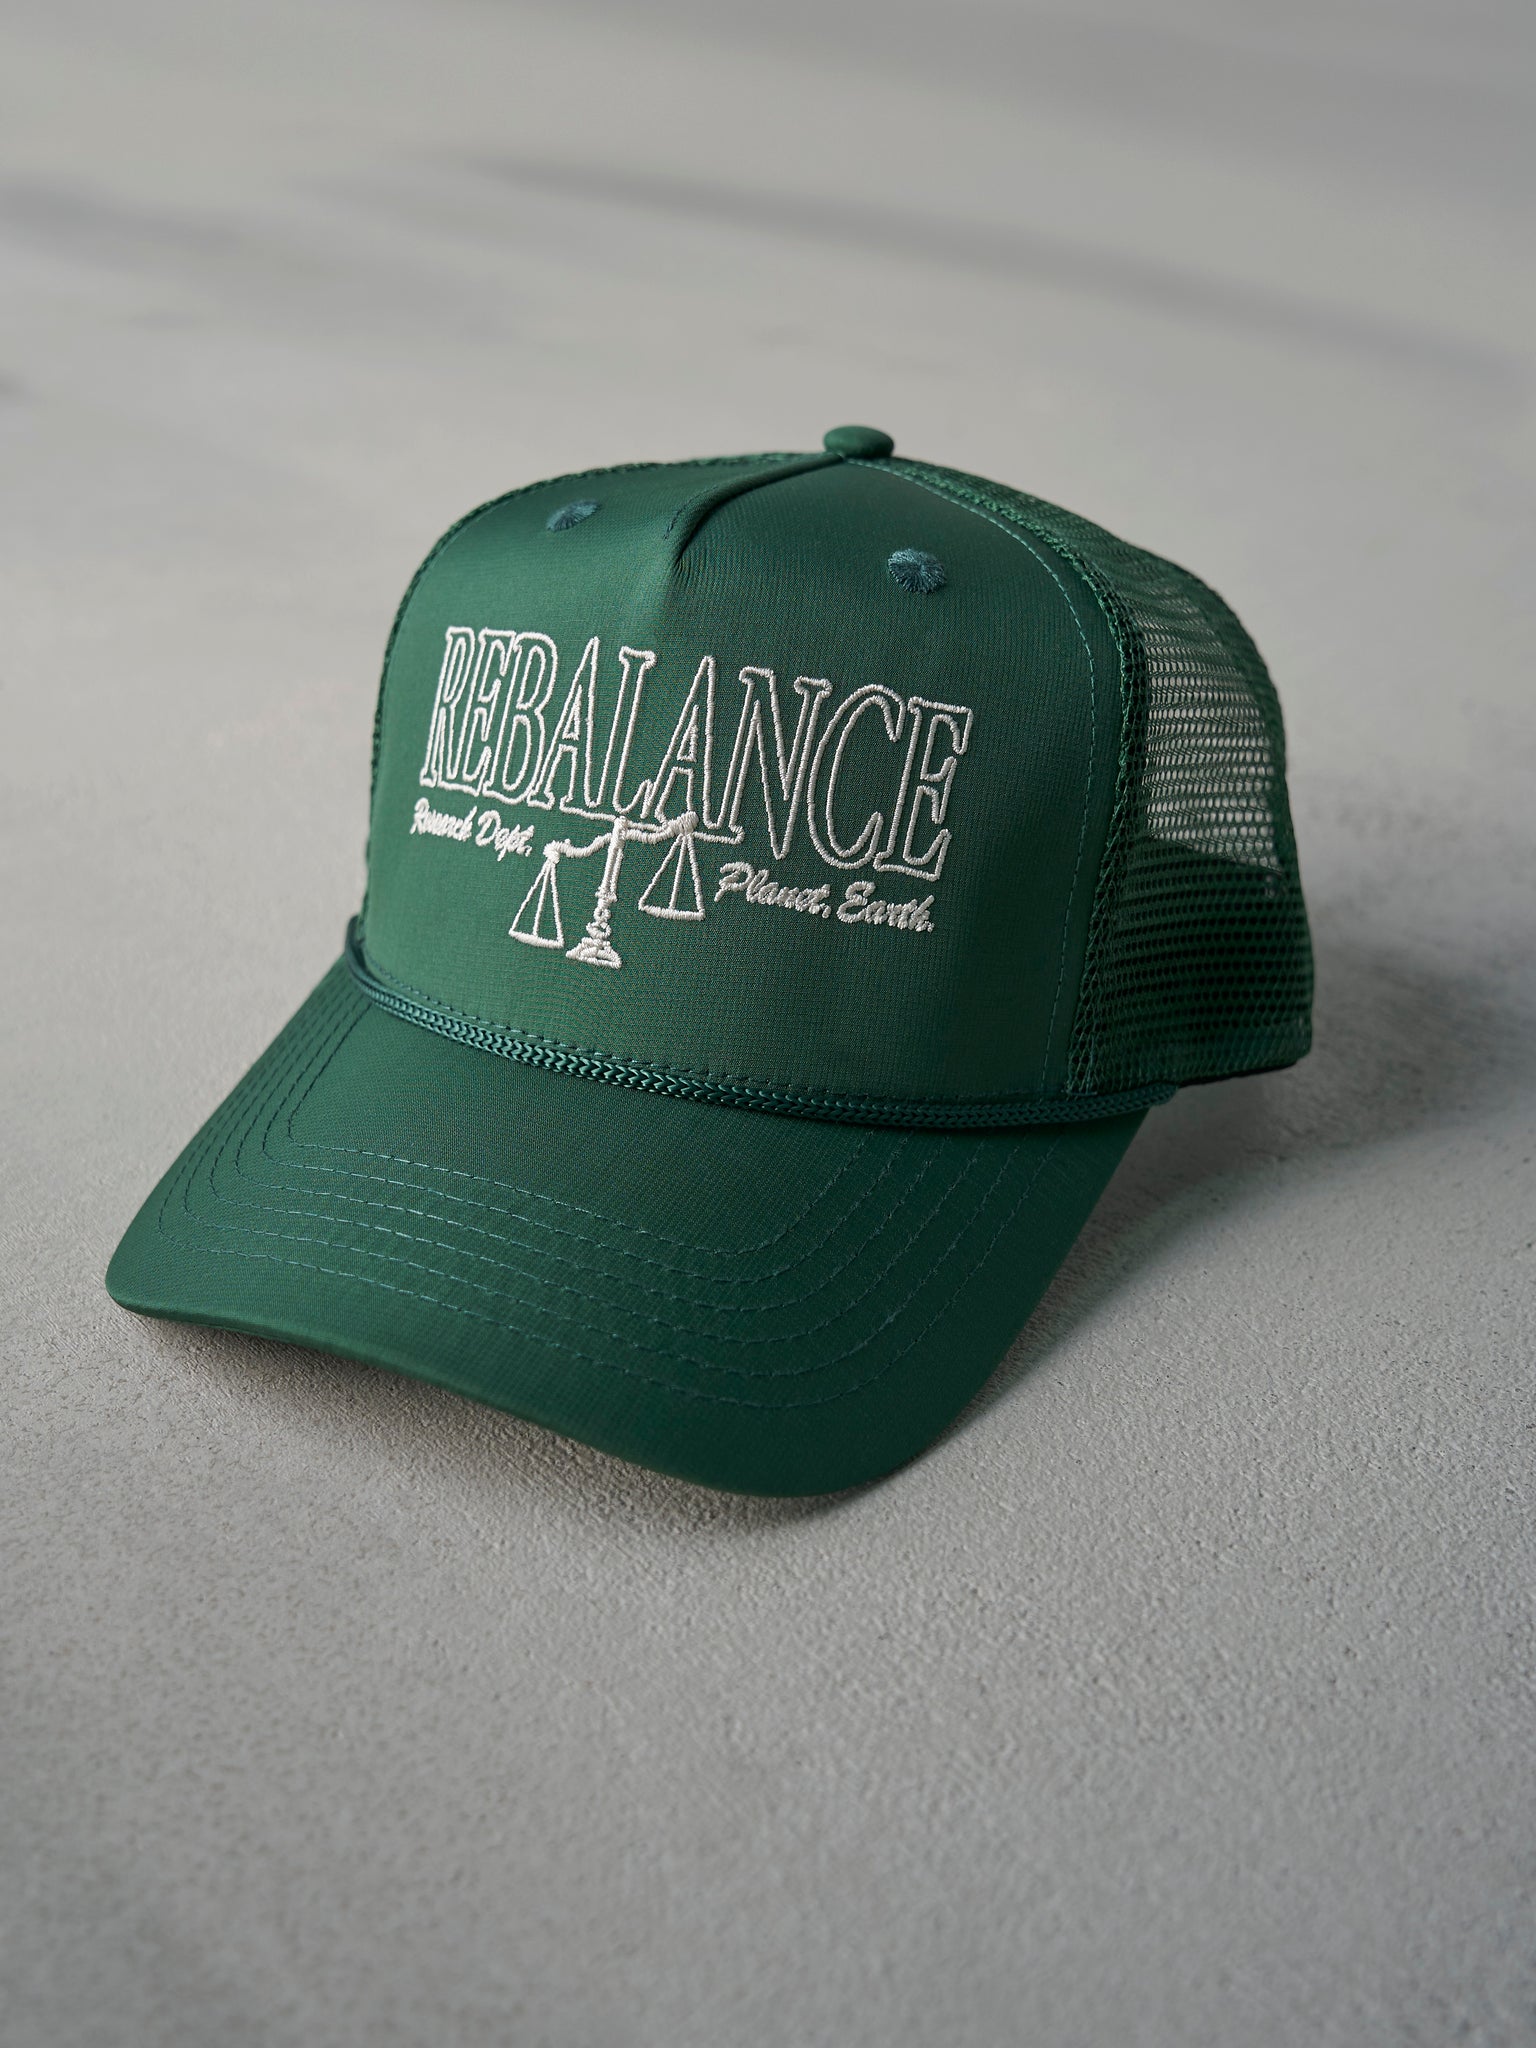 Recycled Rebalance Trucker Hat